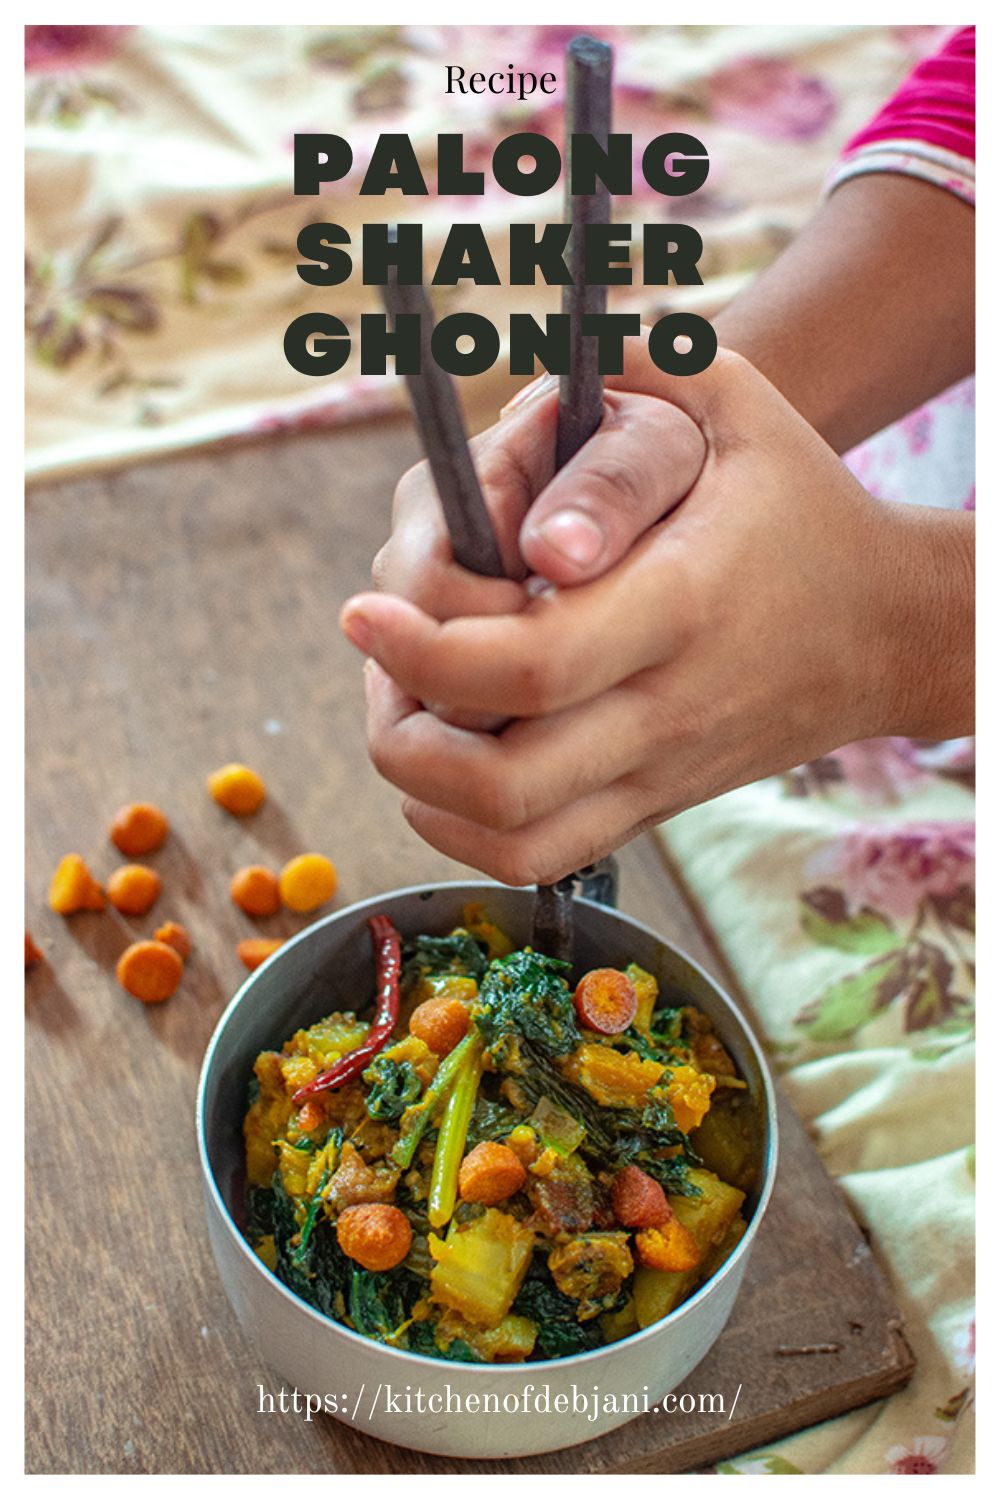 %Bengali Palong Shaker Ghonto Recipe Pinterest Graphic